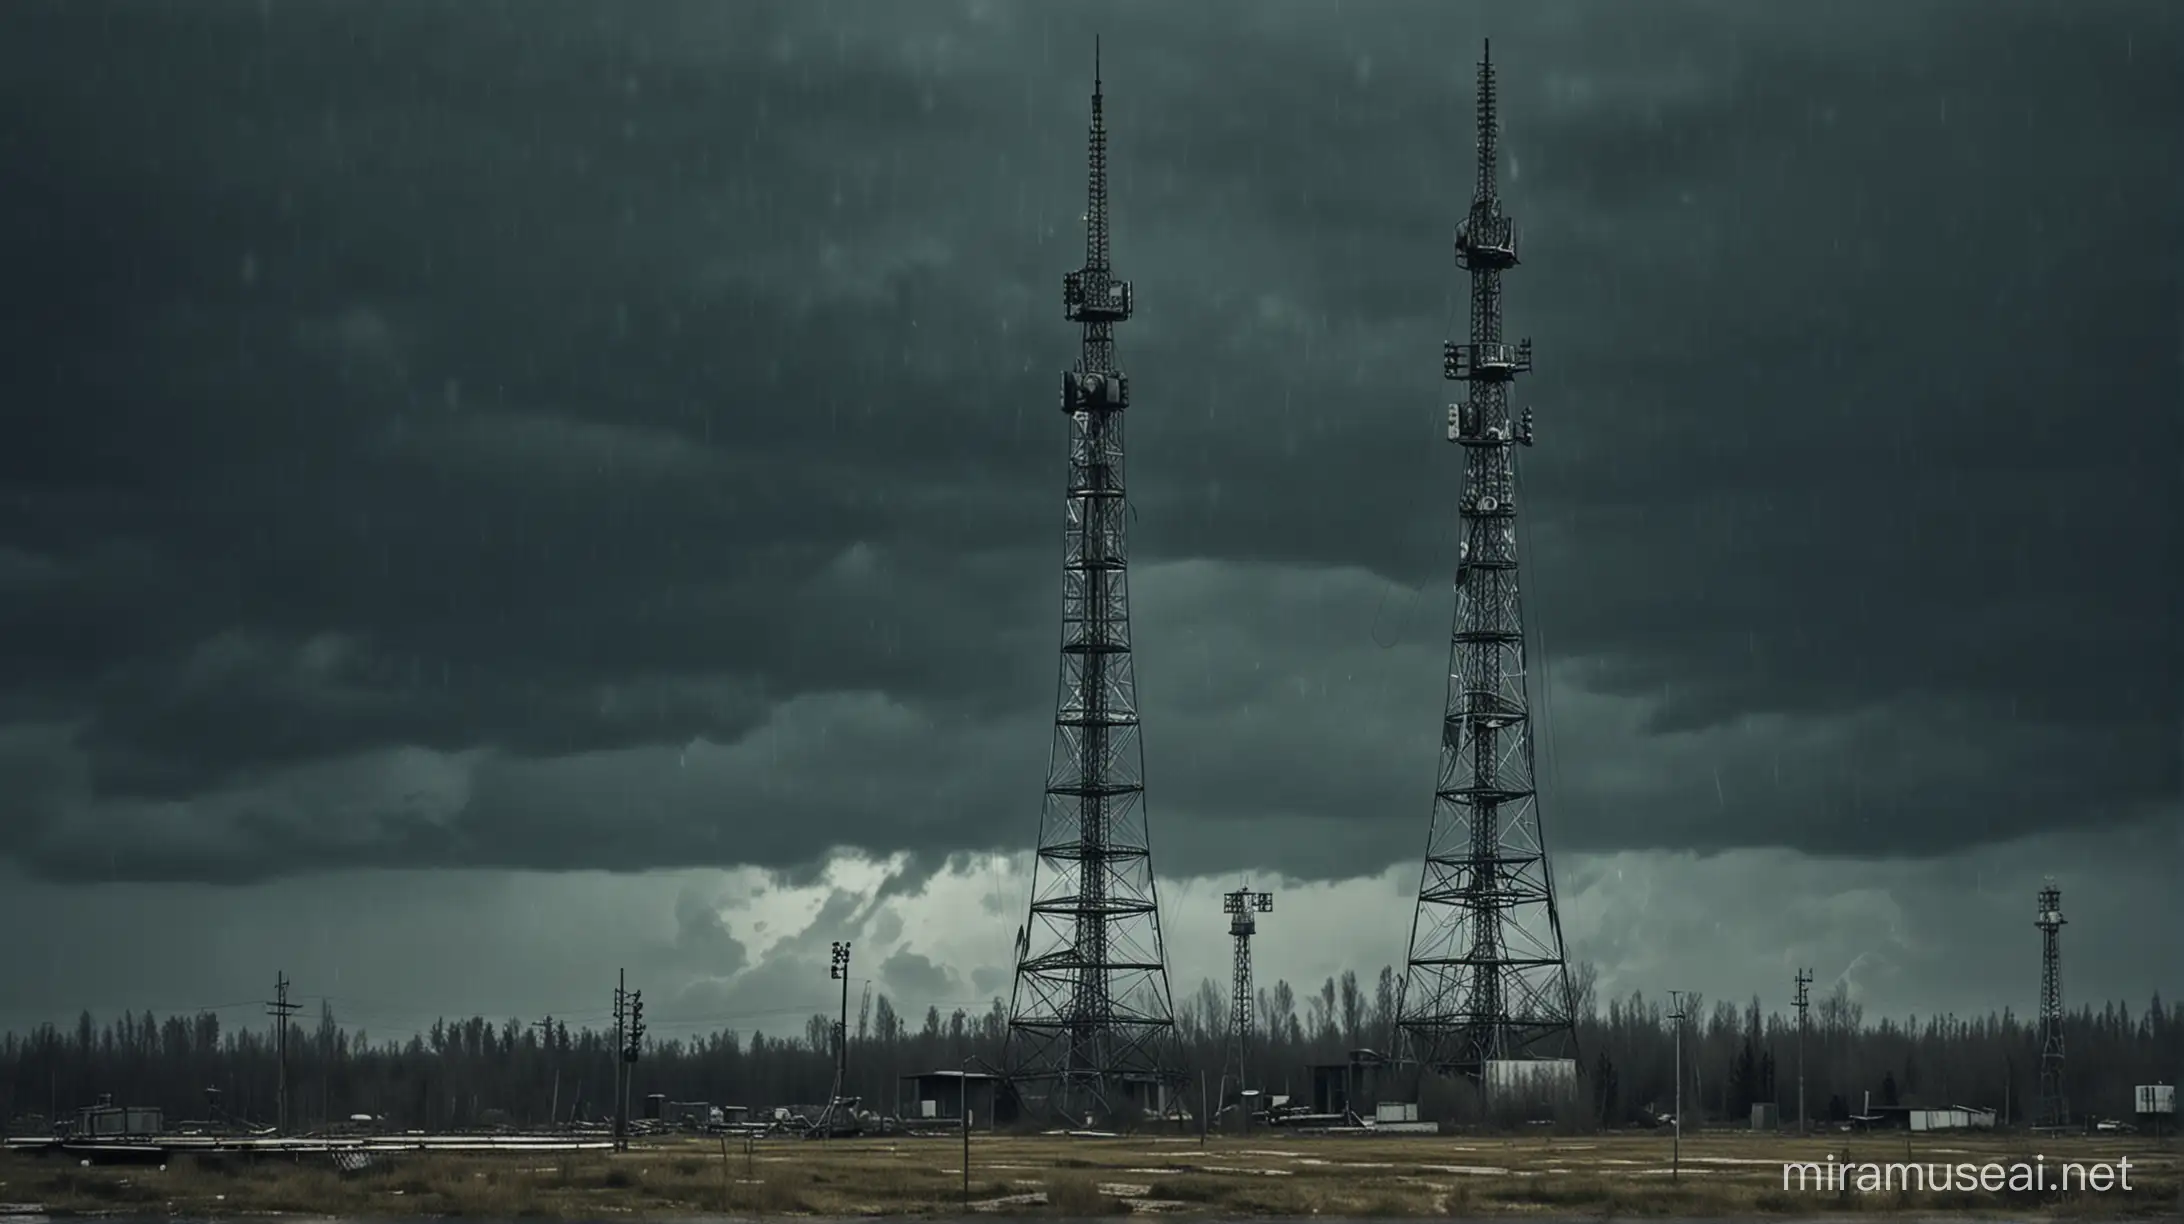 Vintage Russian Radio station ruin. communication tower. rain. dark sky. Cold War, 80s nuclear vibe